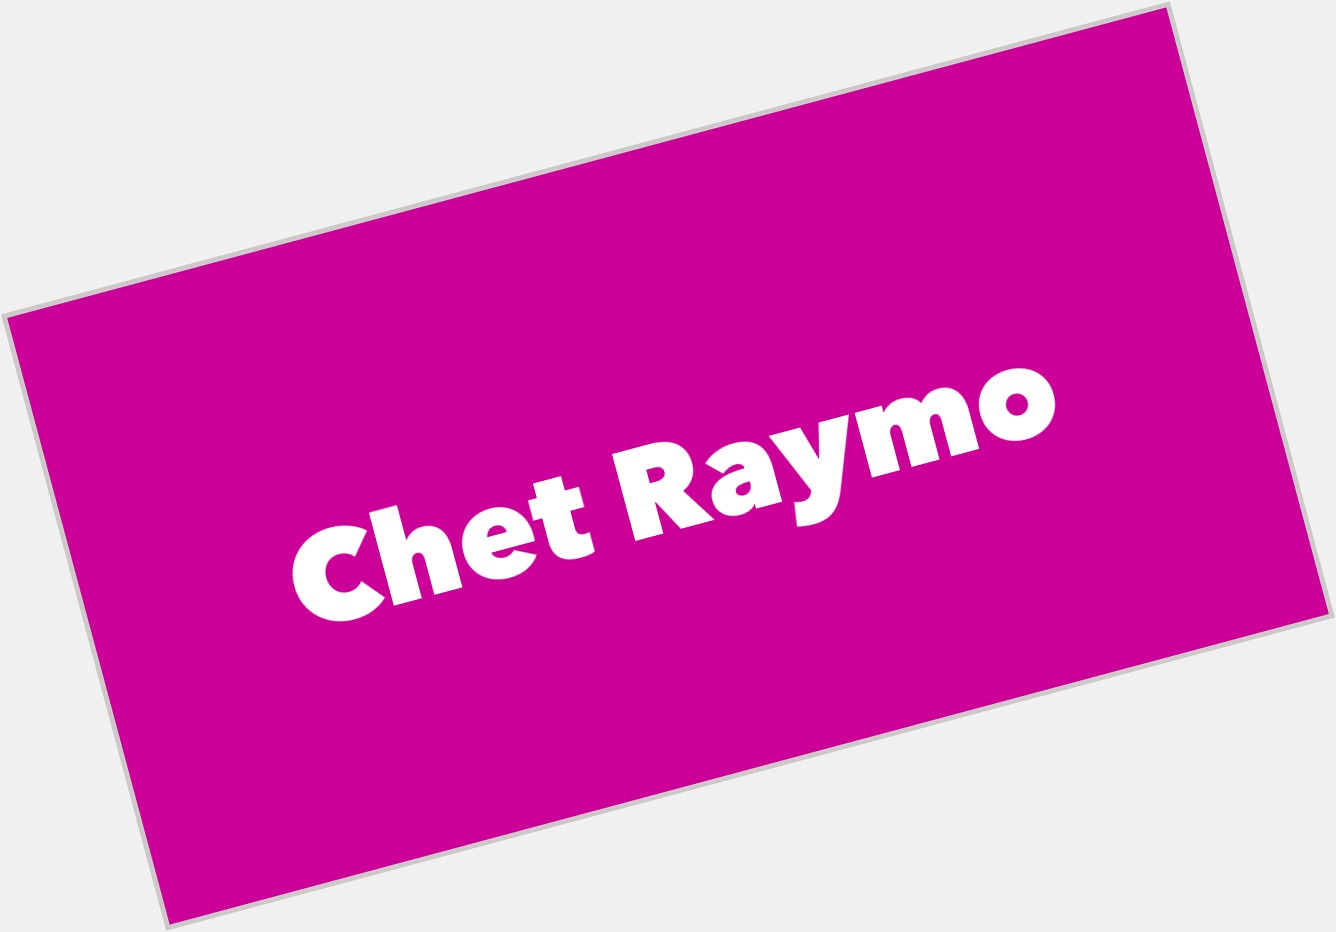 Chet Raymo where who 3